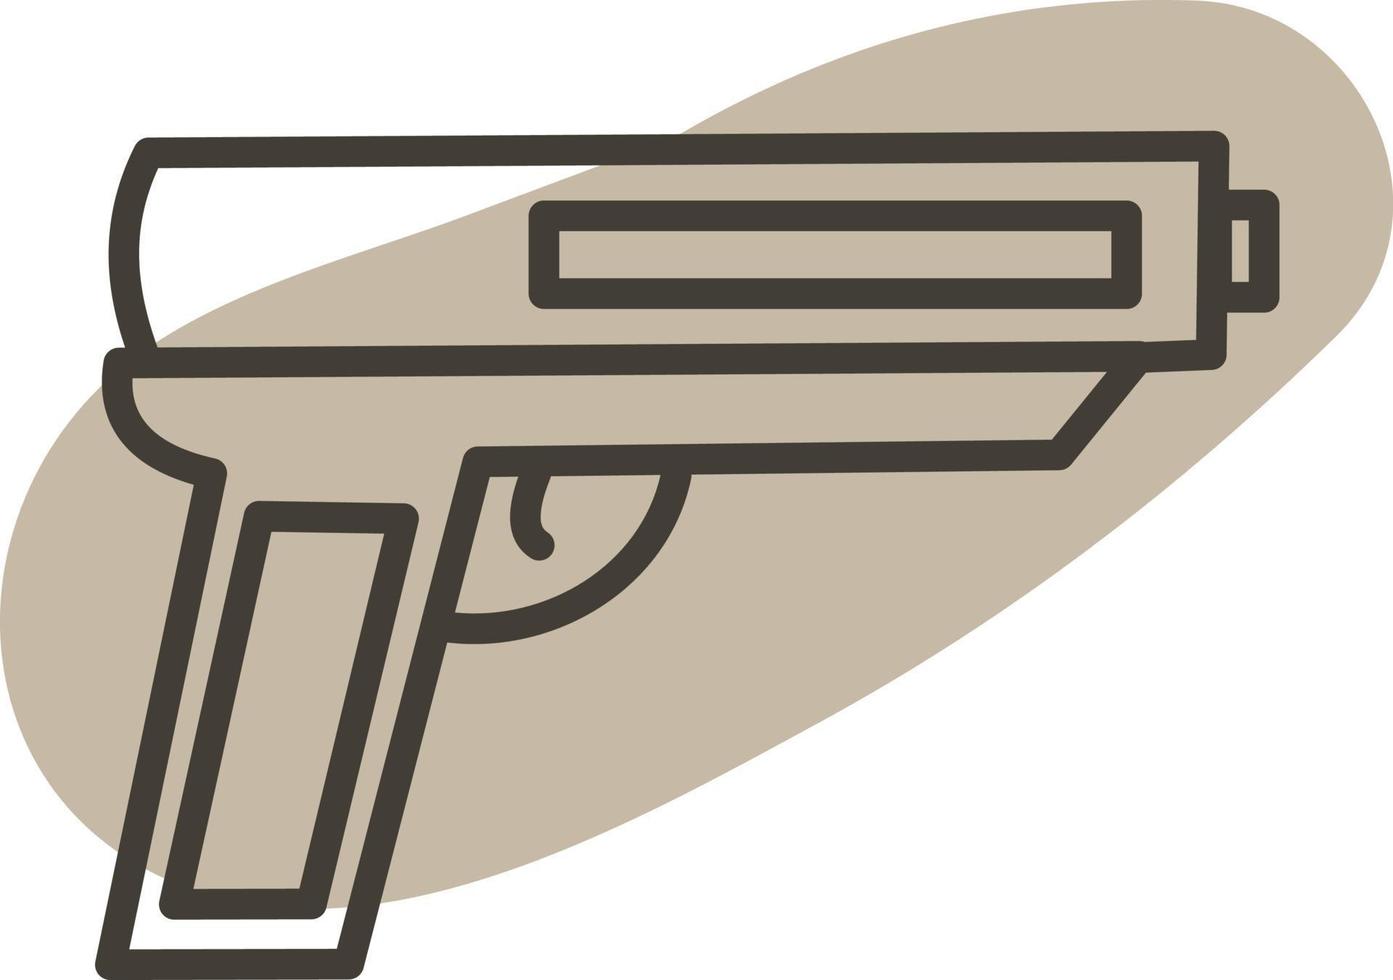 Criminal gun, illustration, vector, on a white background. vector